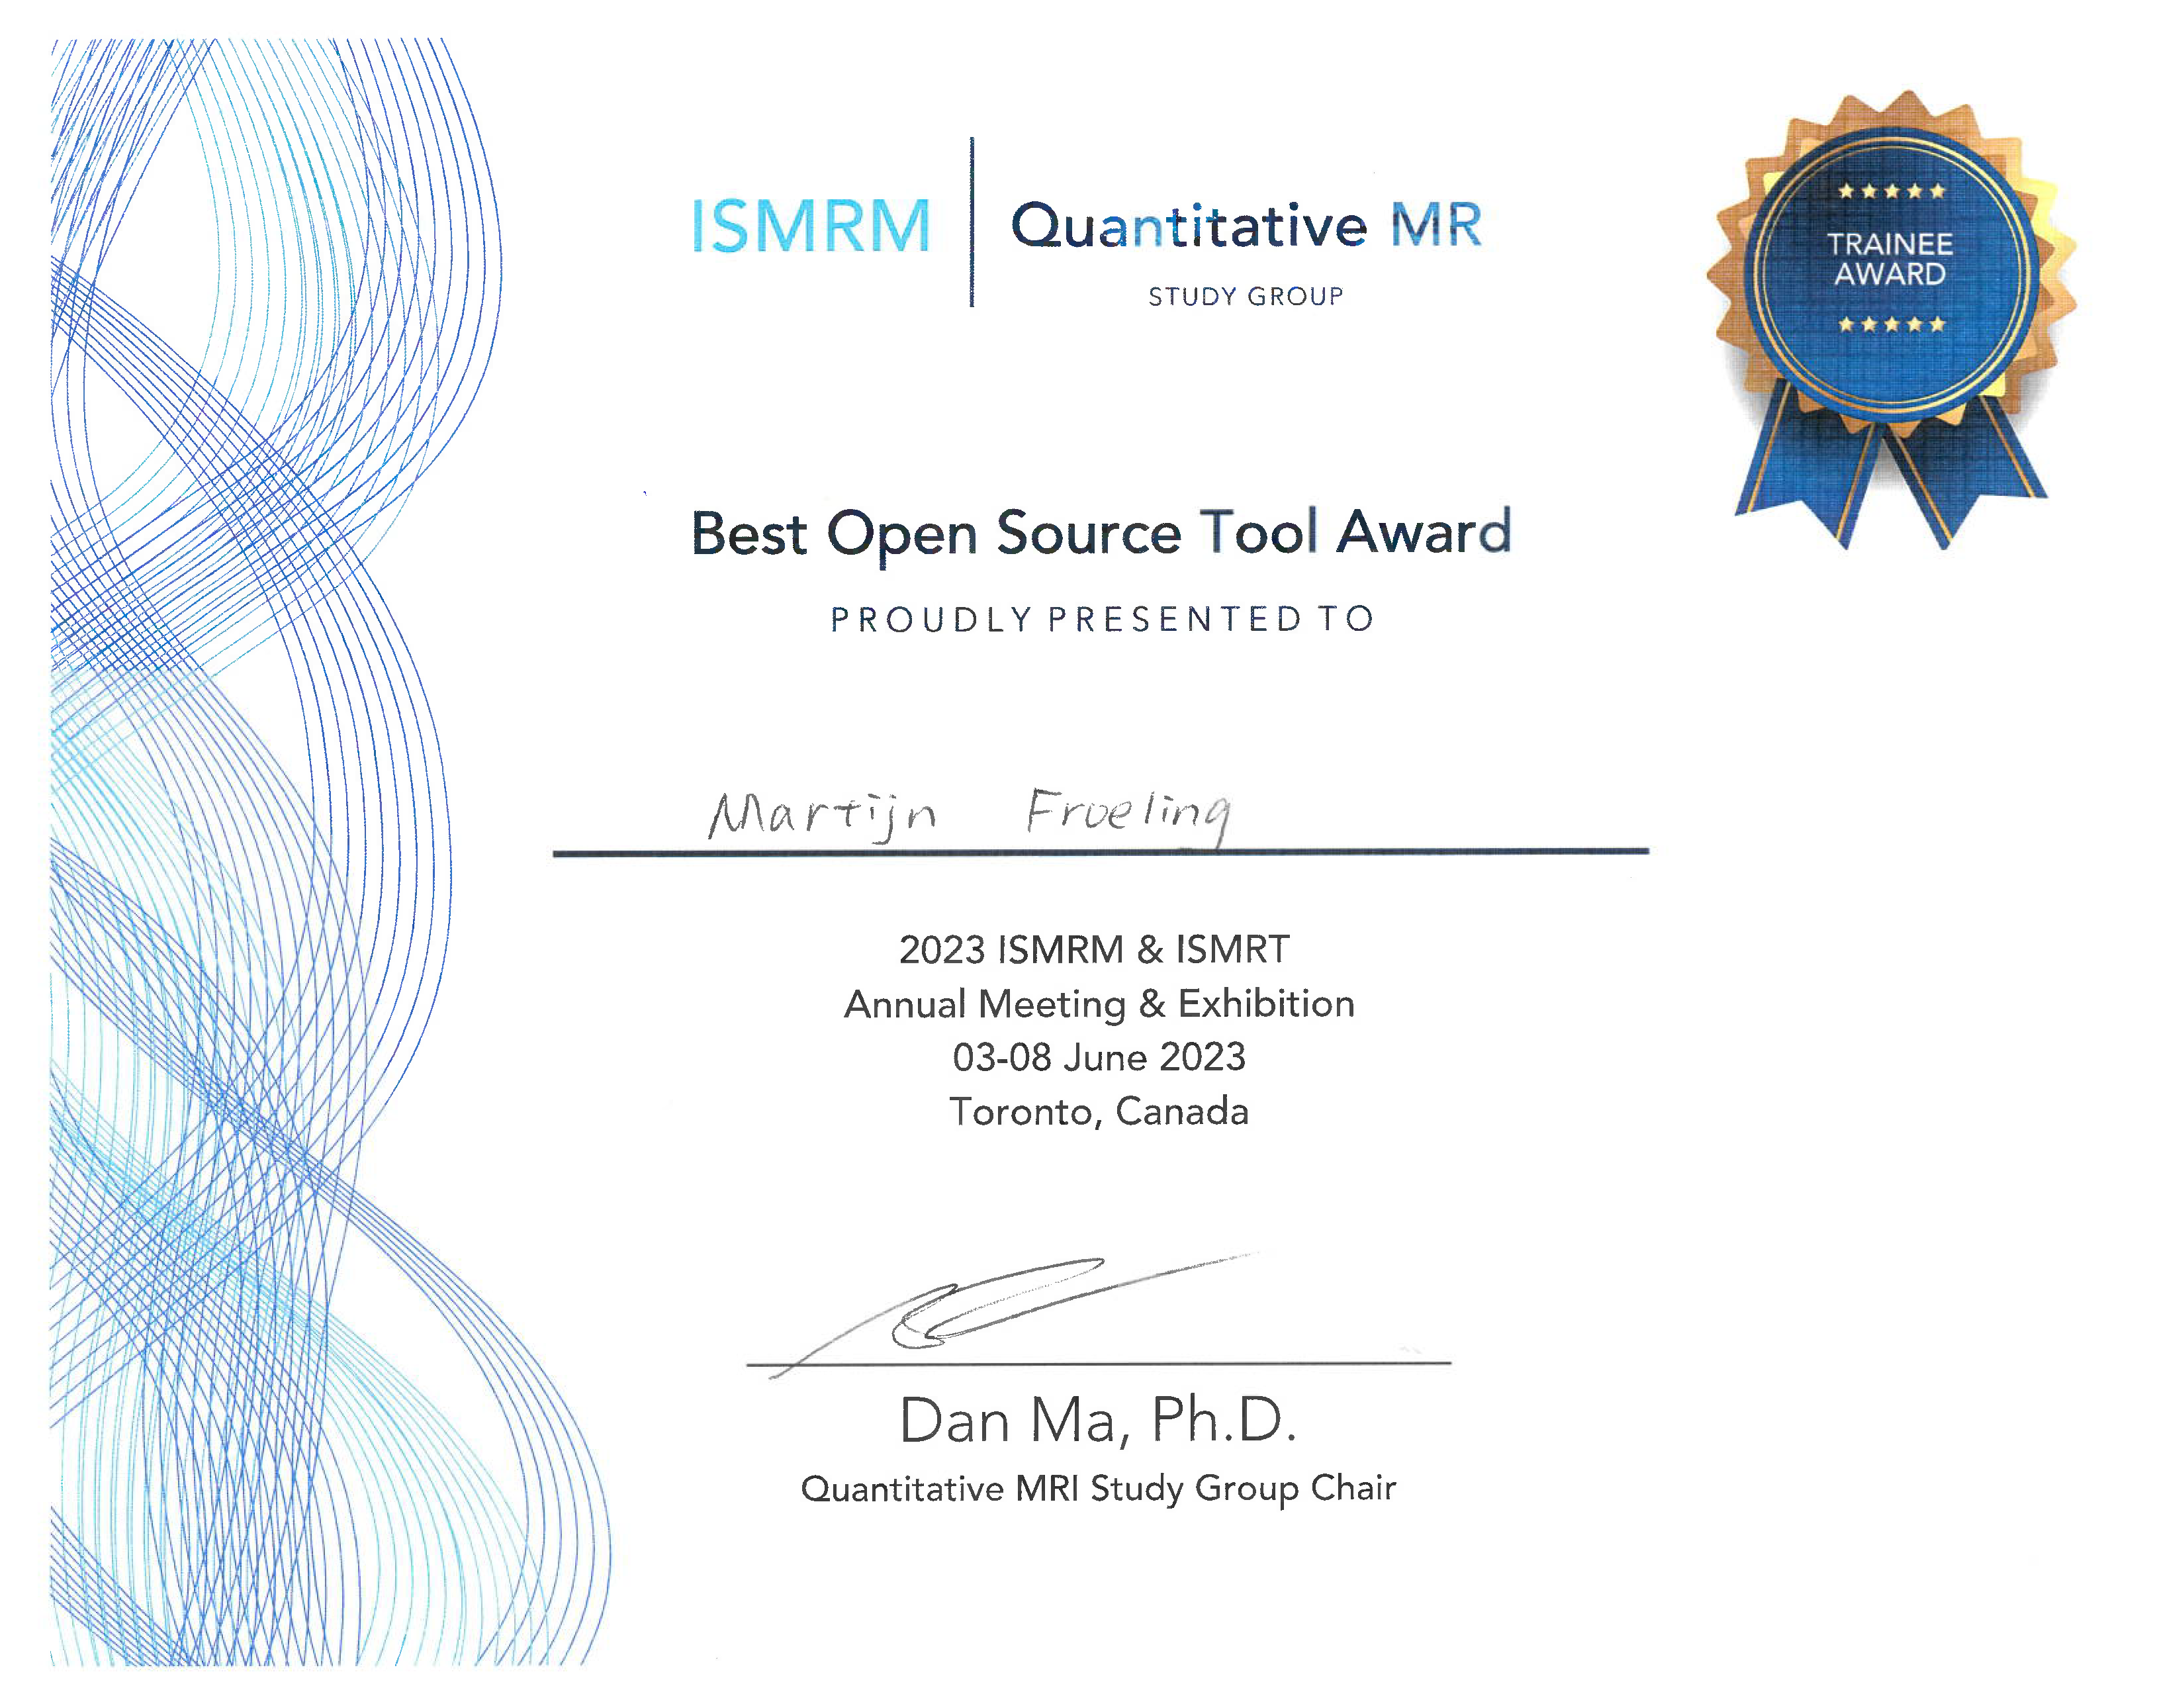 Best Open Source Tool Award for quantitative MRI